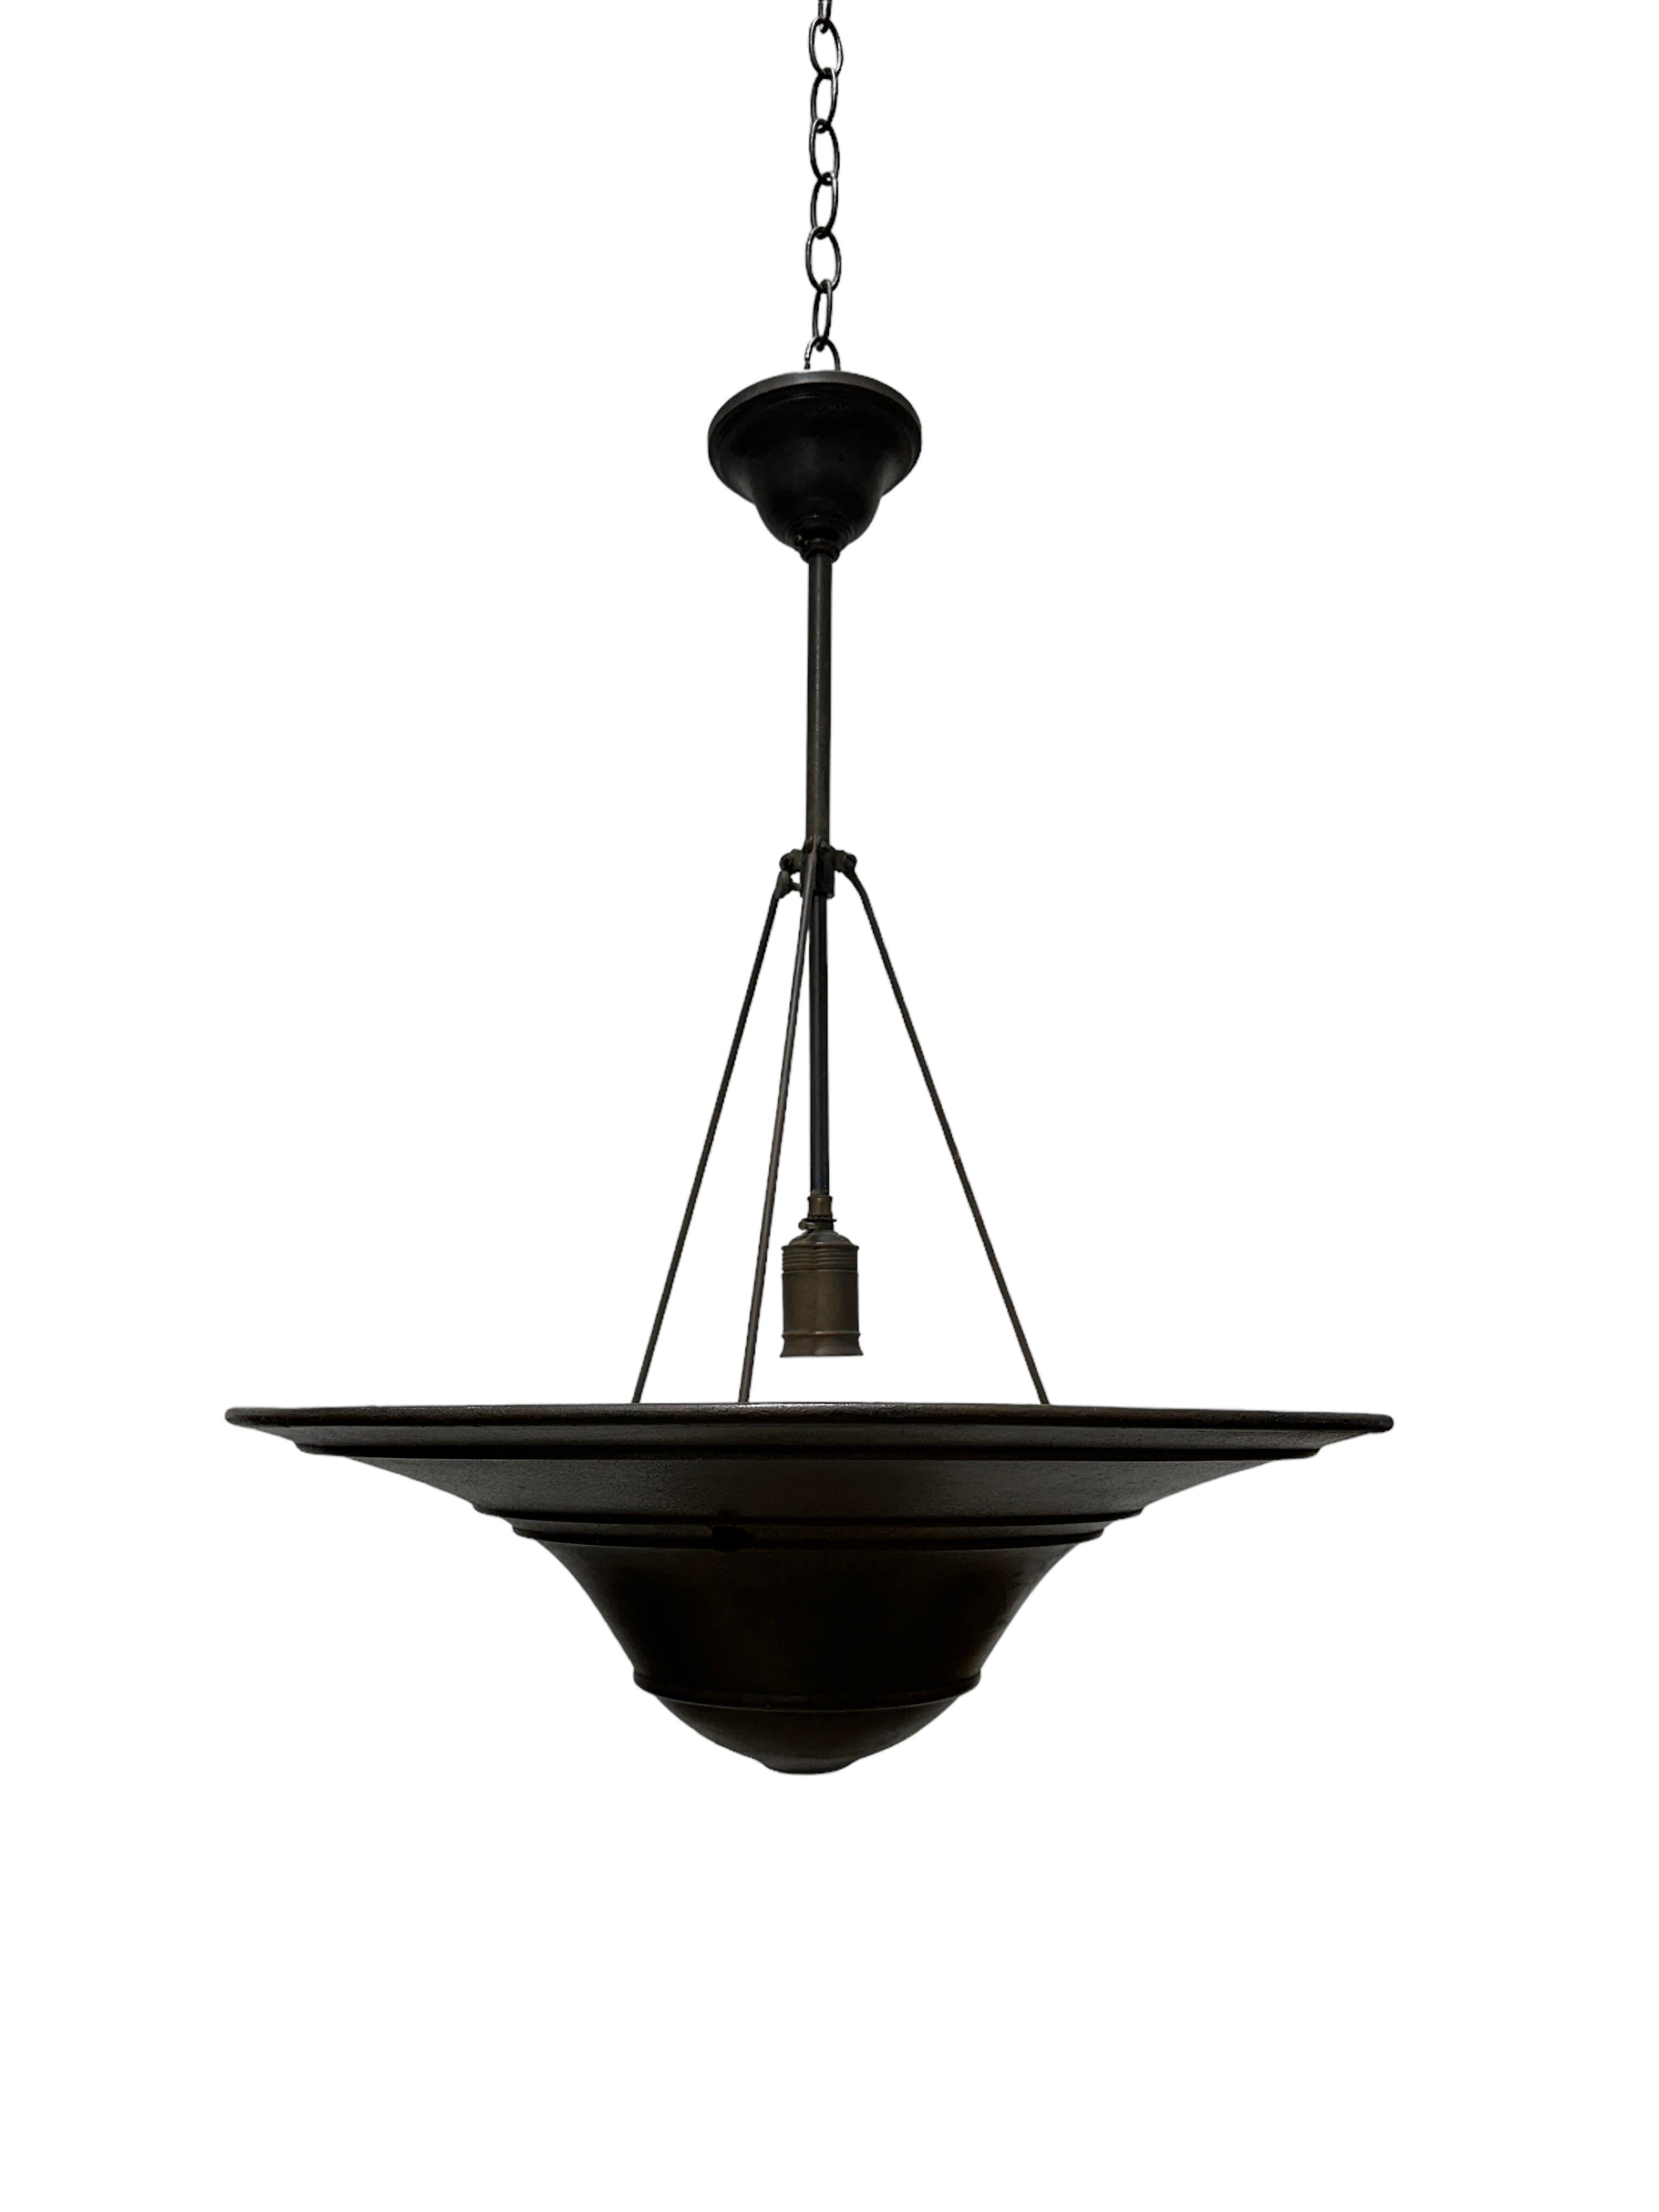 Antique Vintage Industrial Bauhaus Wiskott Mirrored Ceiling Pendant Light Lamp For Sale 2